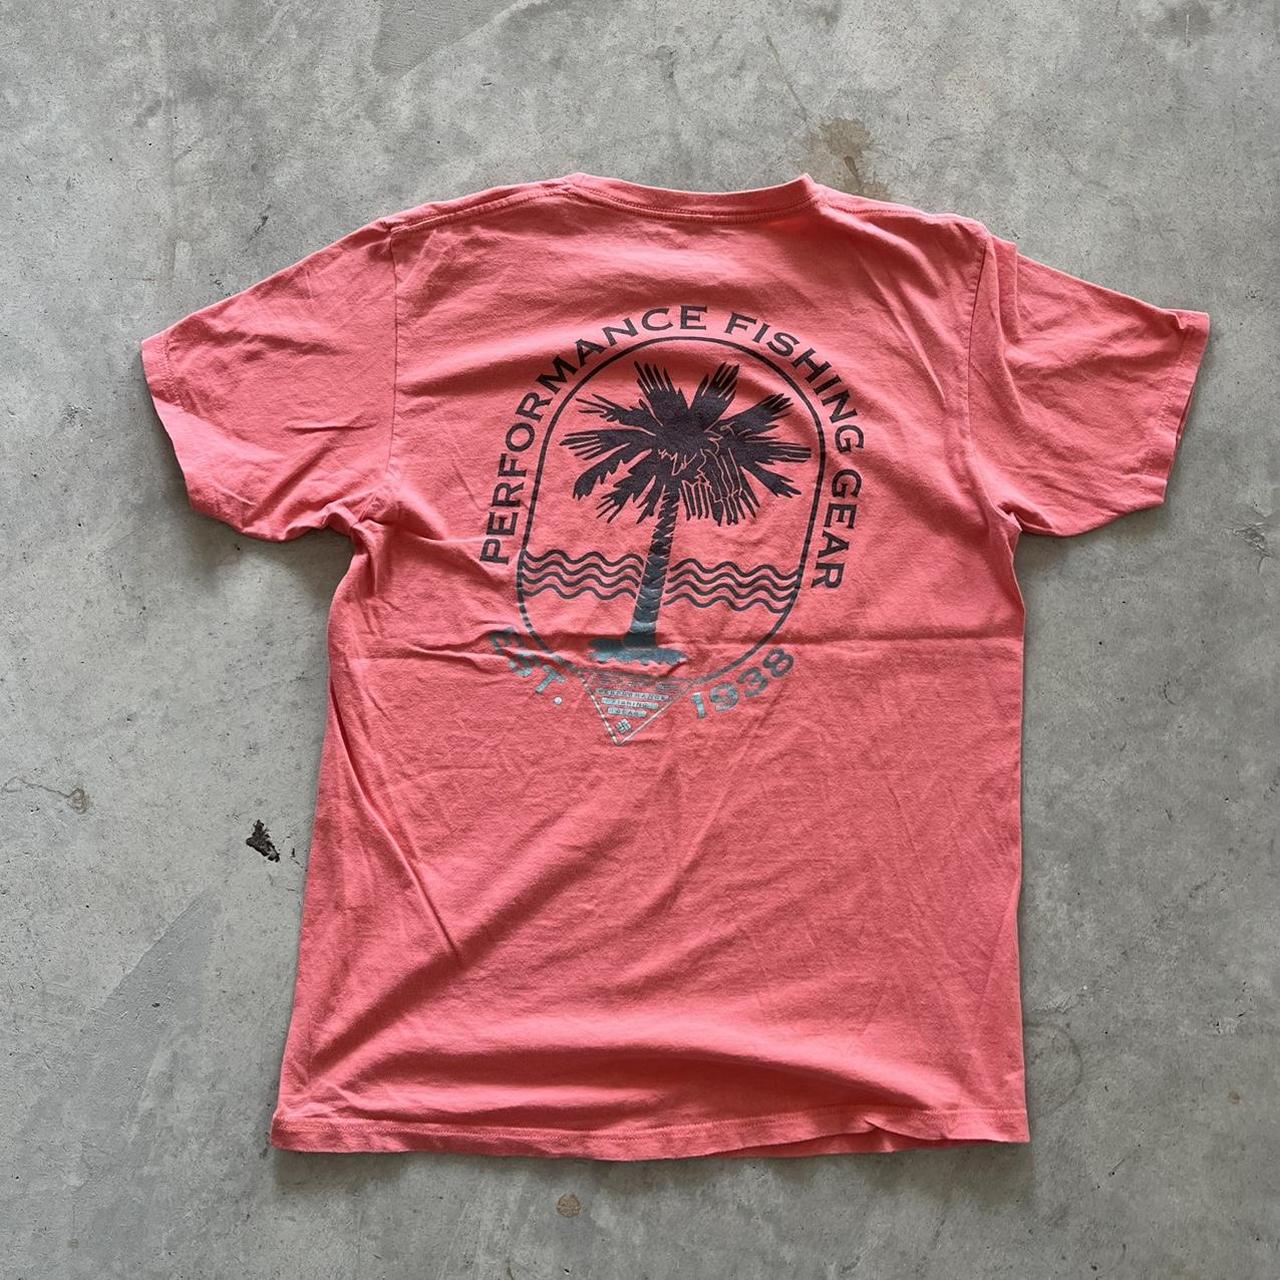 hoy pink, Columbia fishing gear shirt with back - Depop